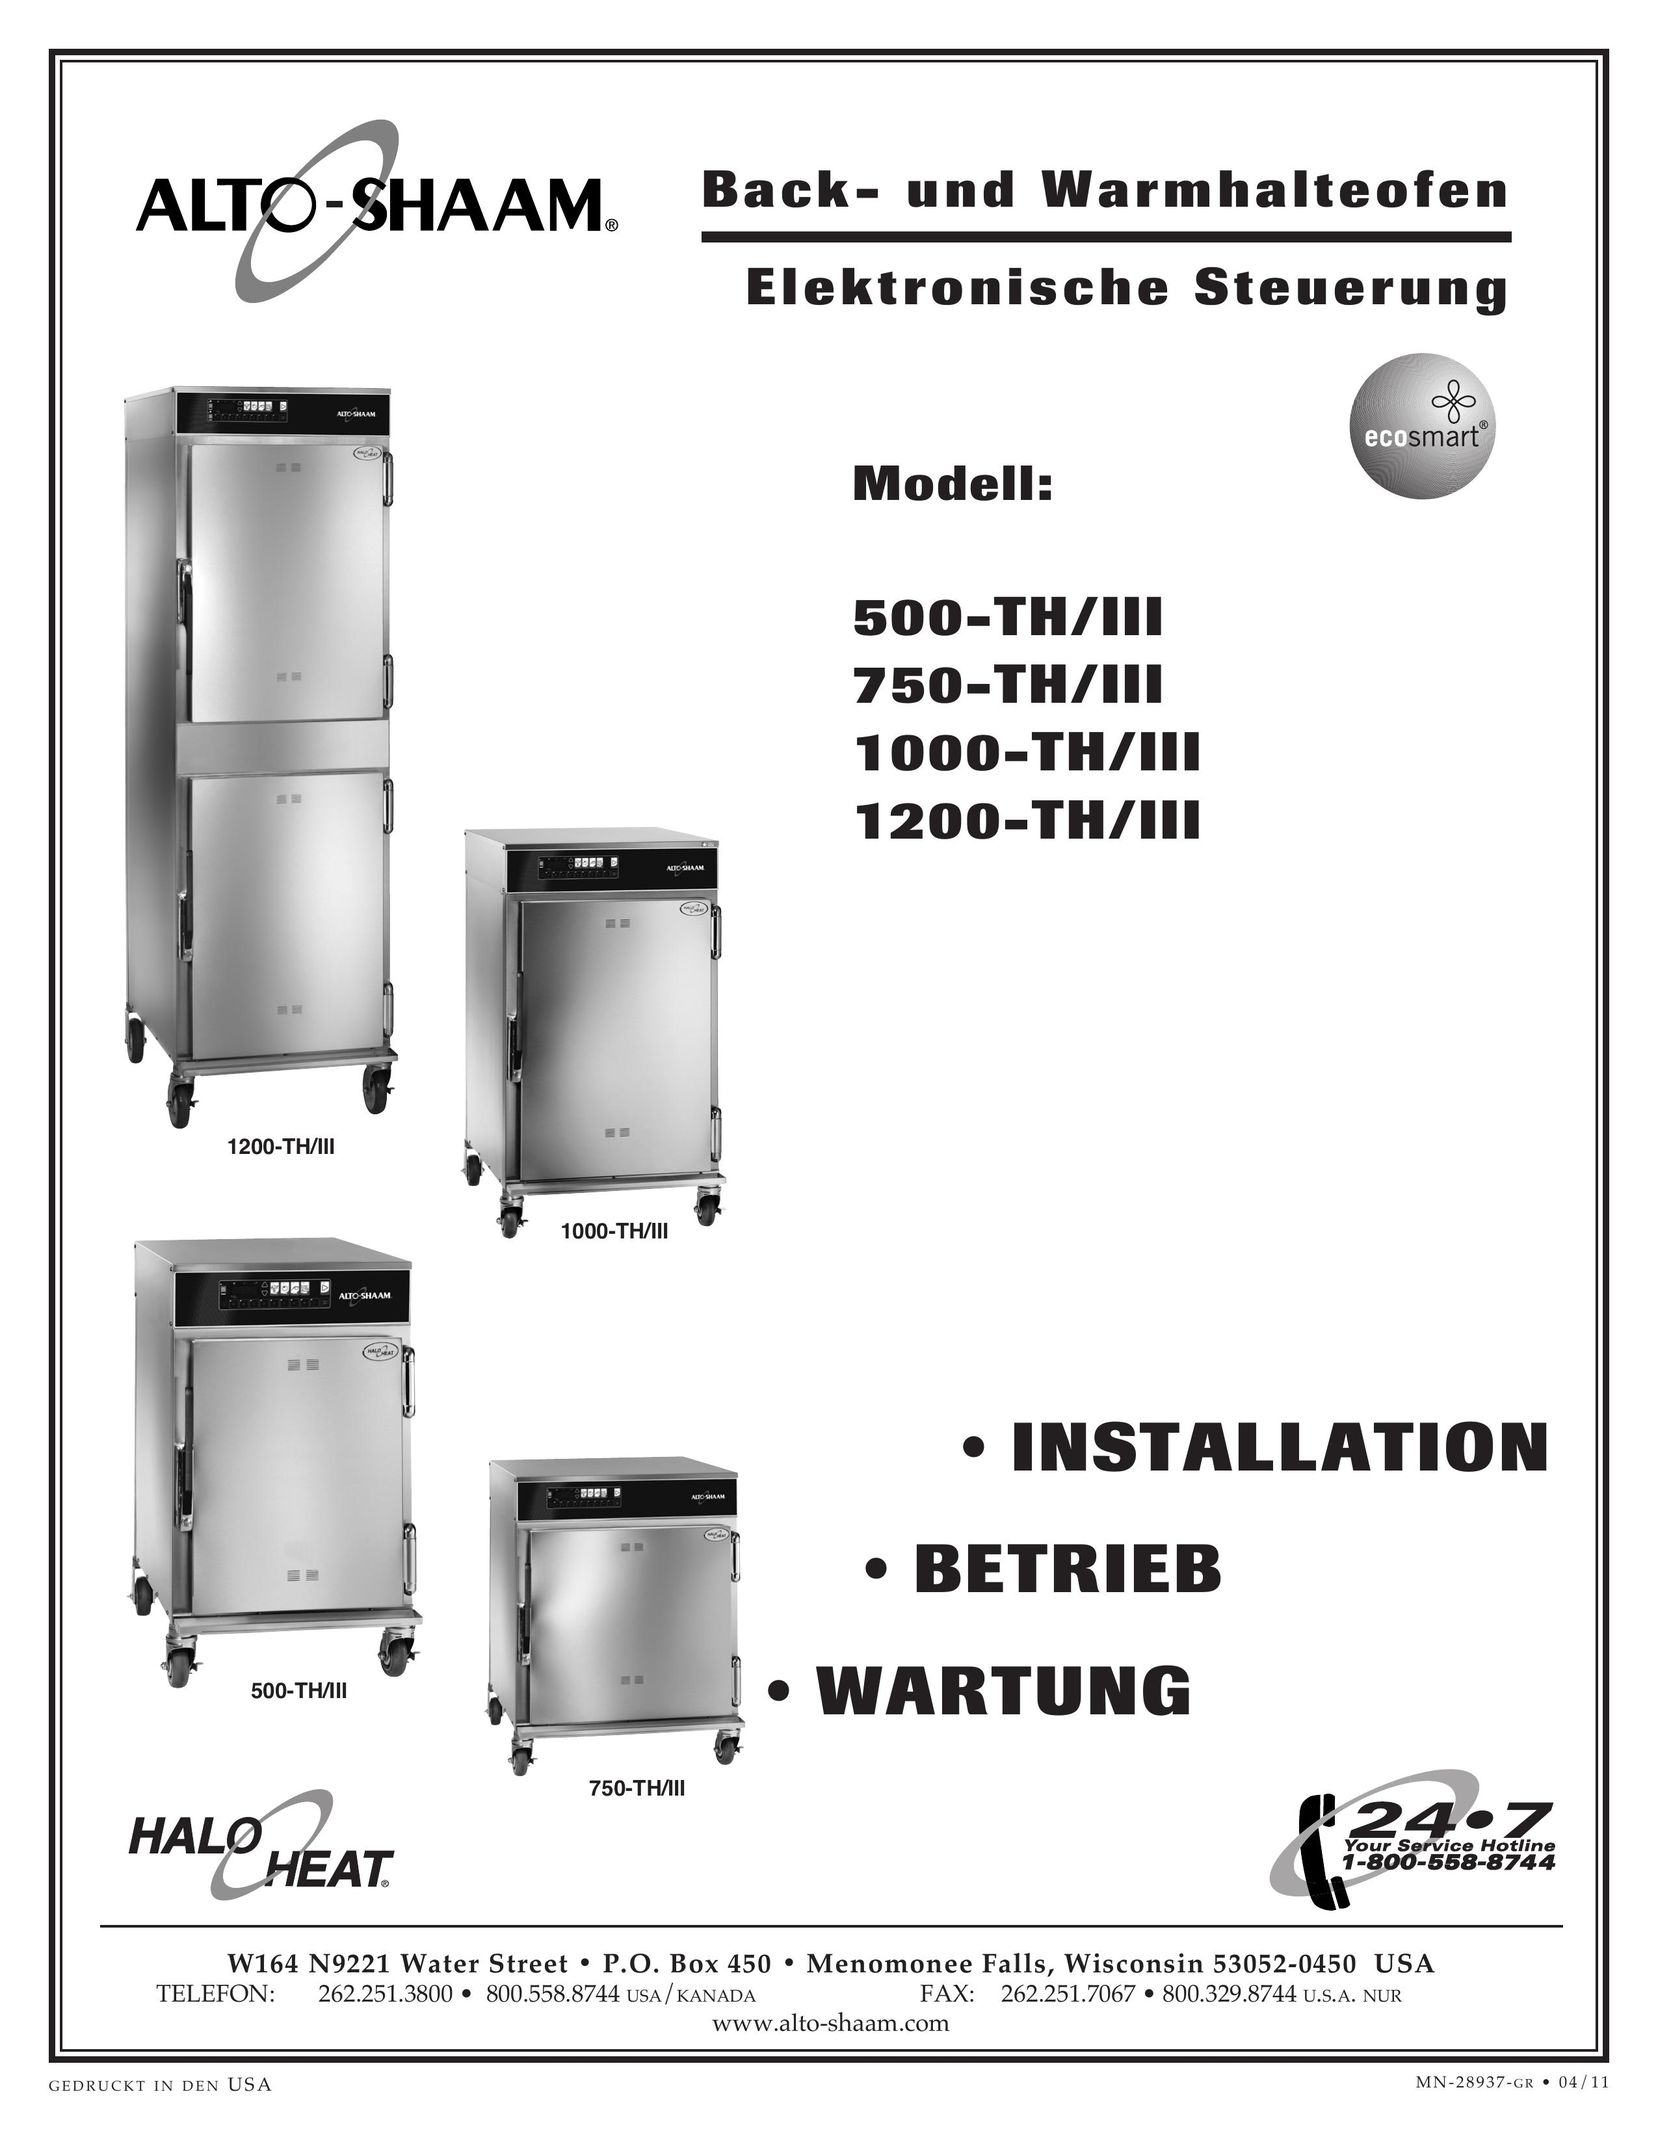 Alto-Shaam 500-TH/III Air Conditioner User Manual